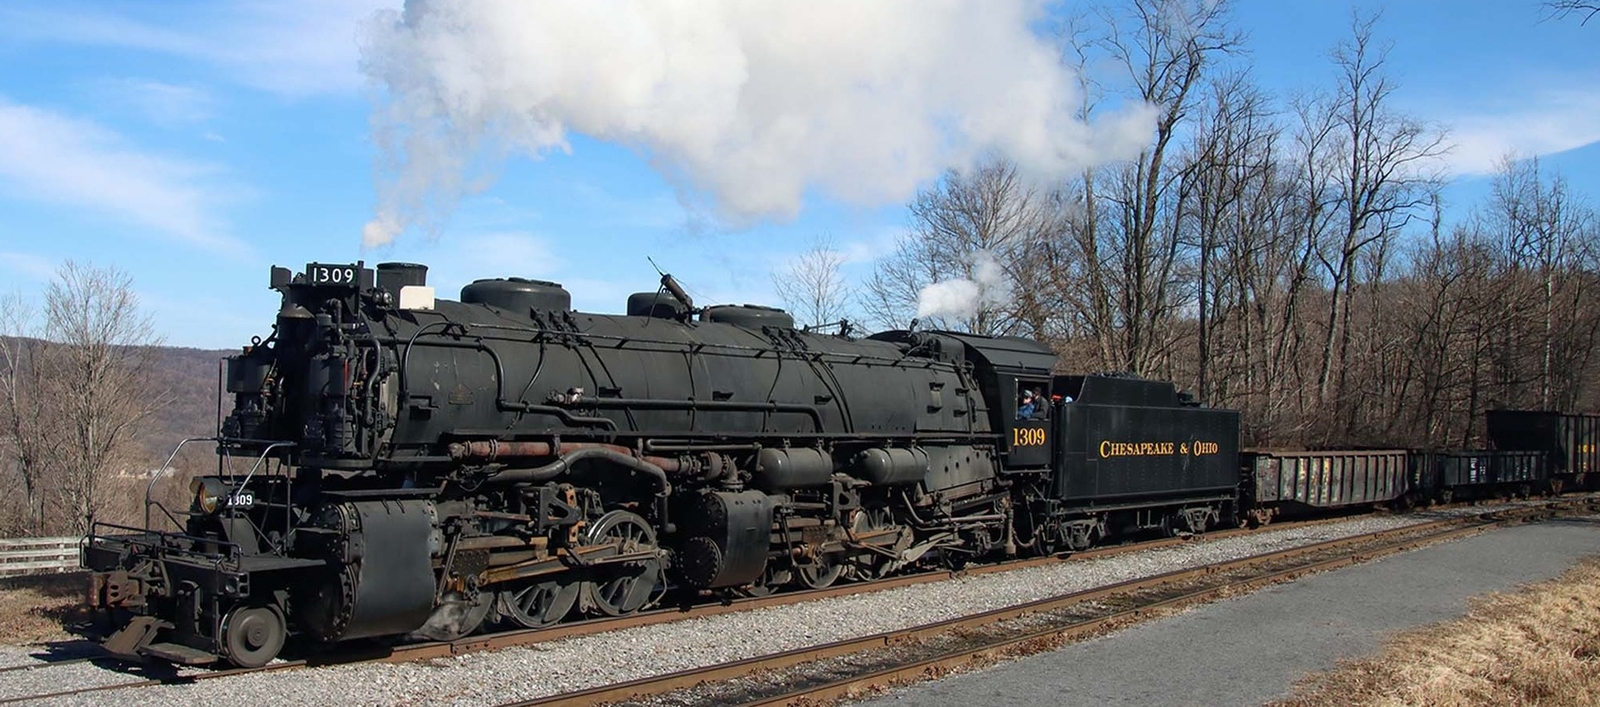 Chesapeake & Ohio No. 1309 in February 2023 on the Western Maryland Scenic Railroad